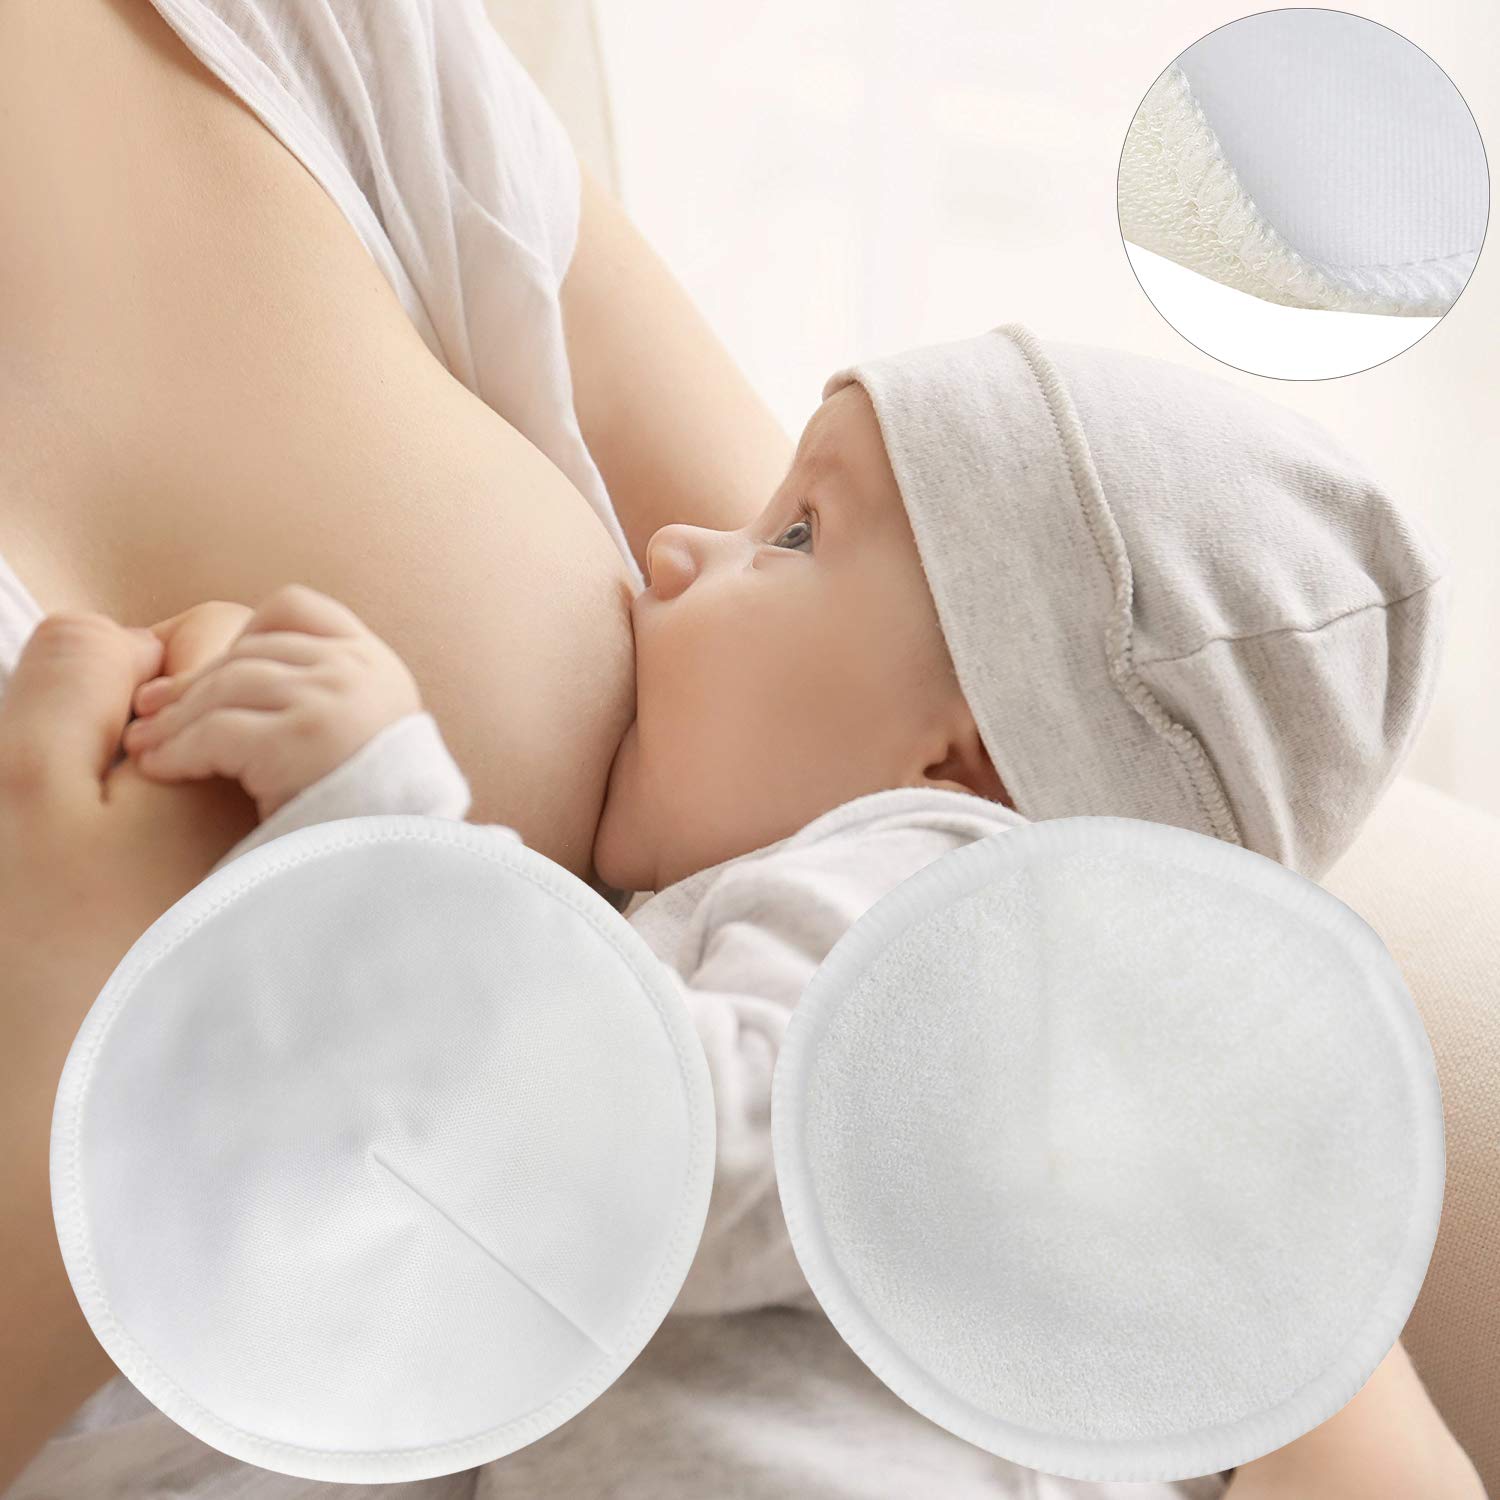 YLSHRF Breastfeeding Pad, Nursing Pad,6pcs Washable Reusable Soft Breast  Pads Absorbent Breastfeeding Nursing Pad 